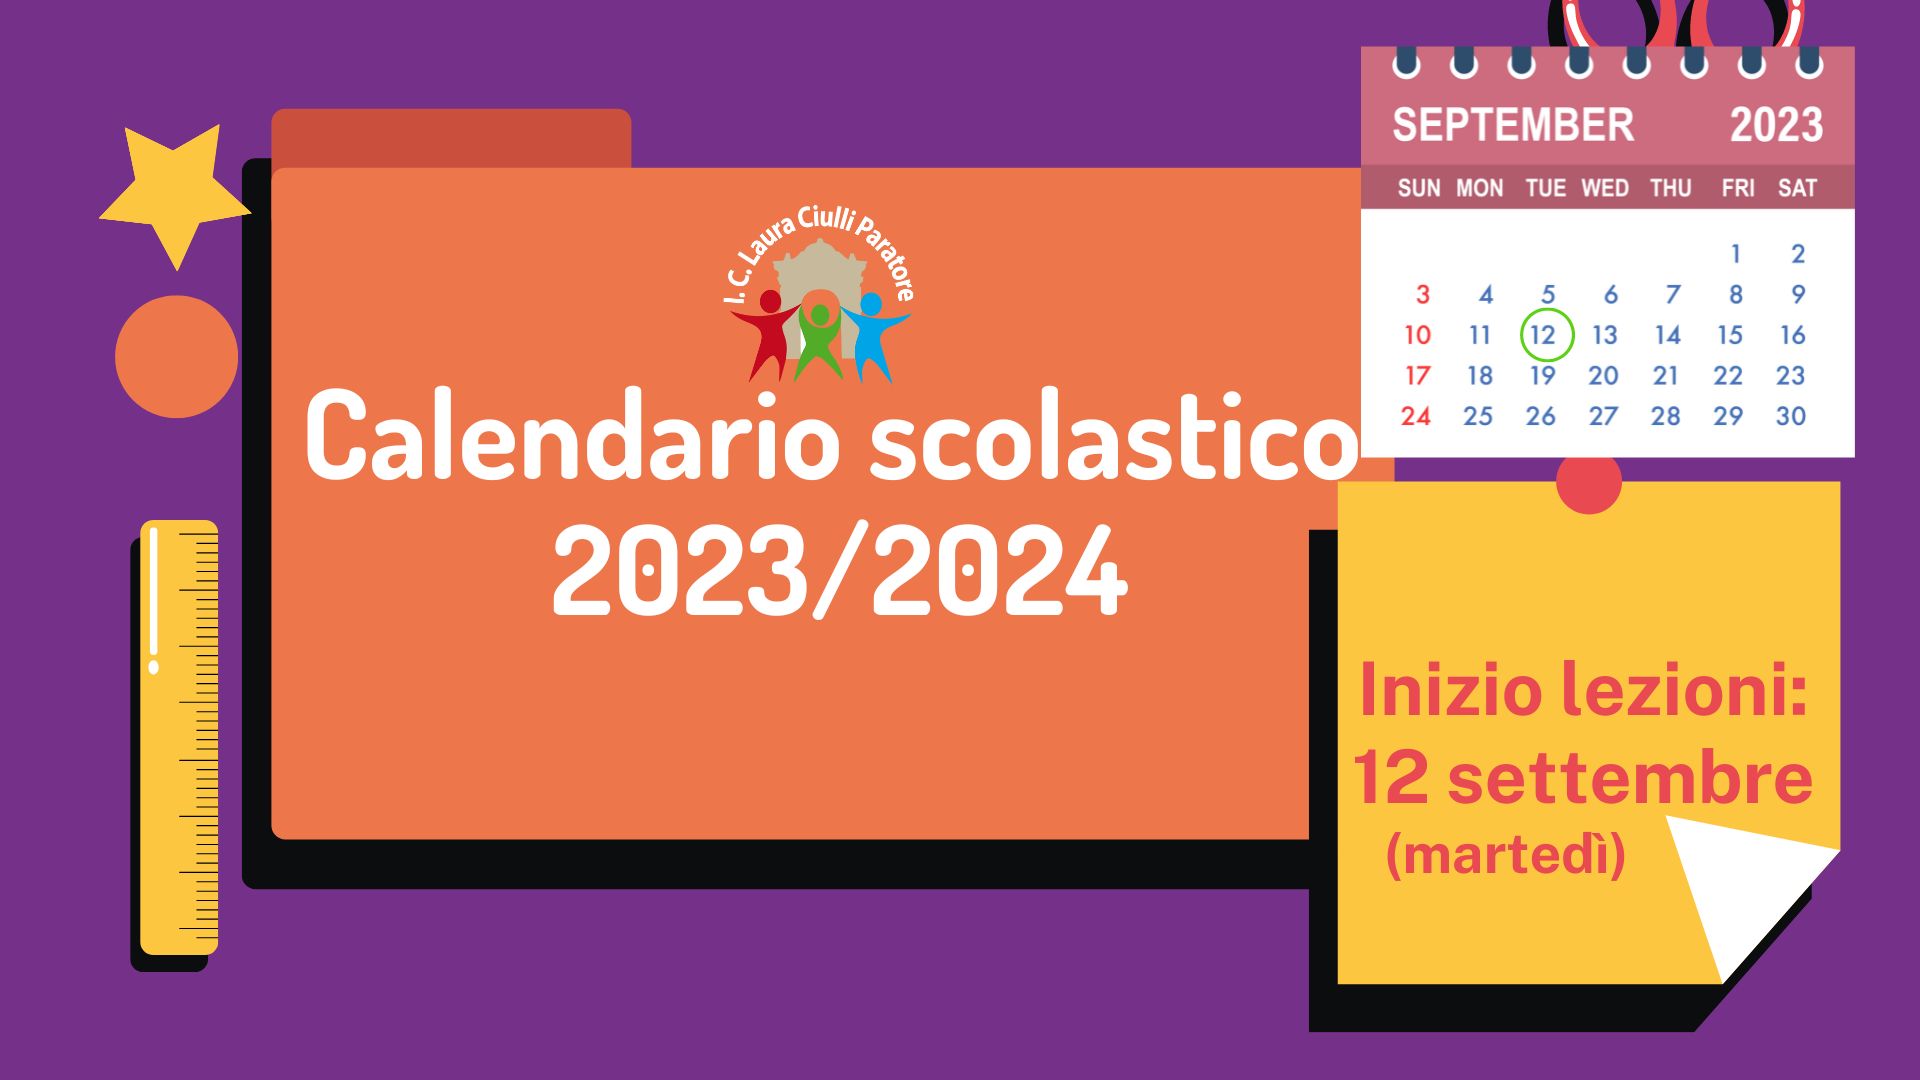 Calendario scolastico 2023/2024